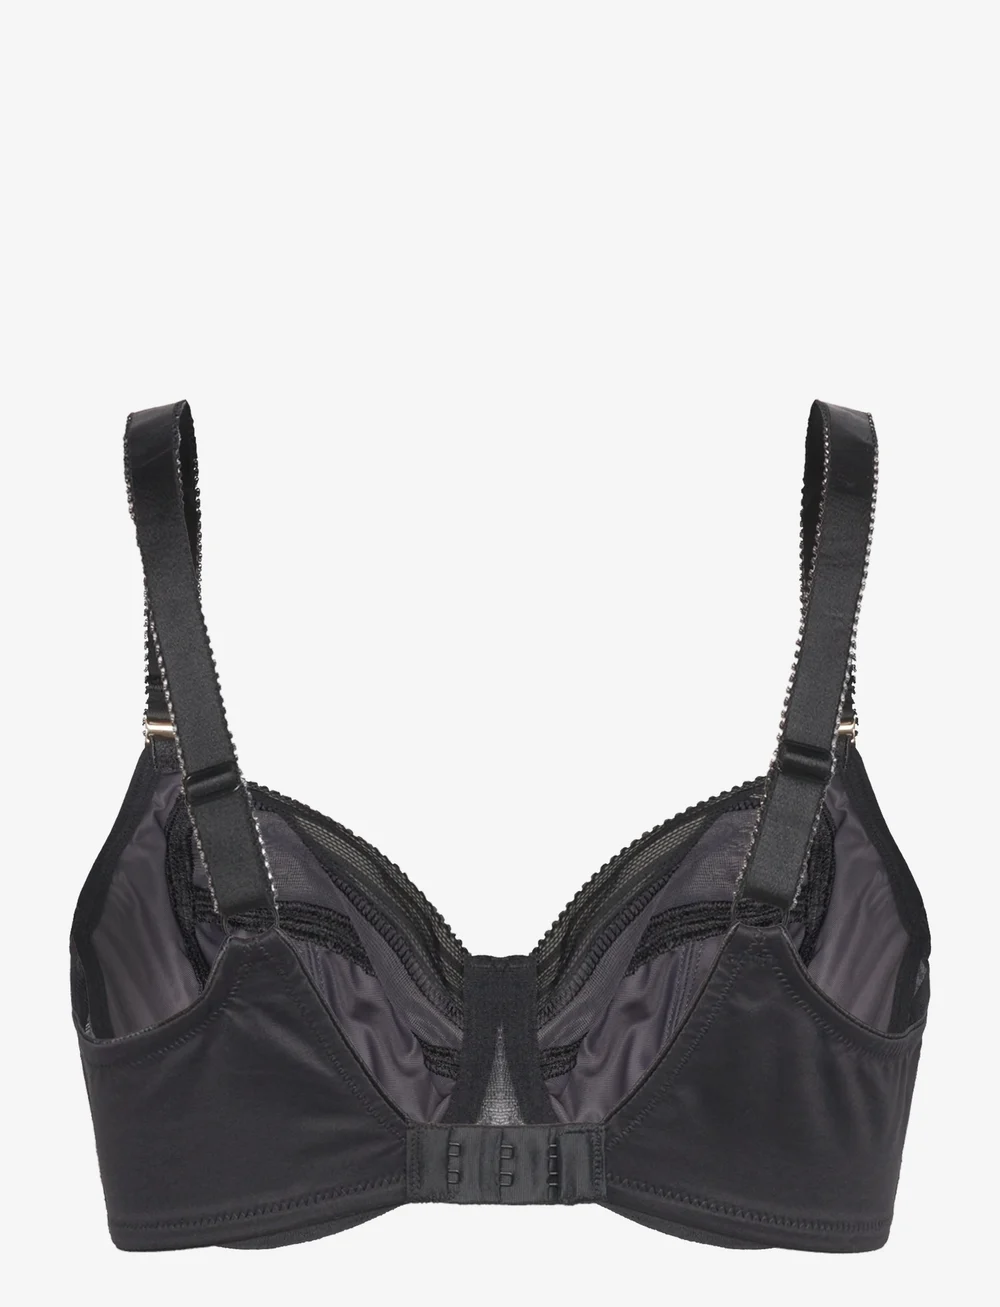 Fantasie Fusion Lace Uw Side Support Bra 40 D – bras – shop at